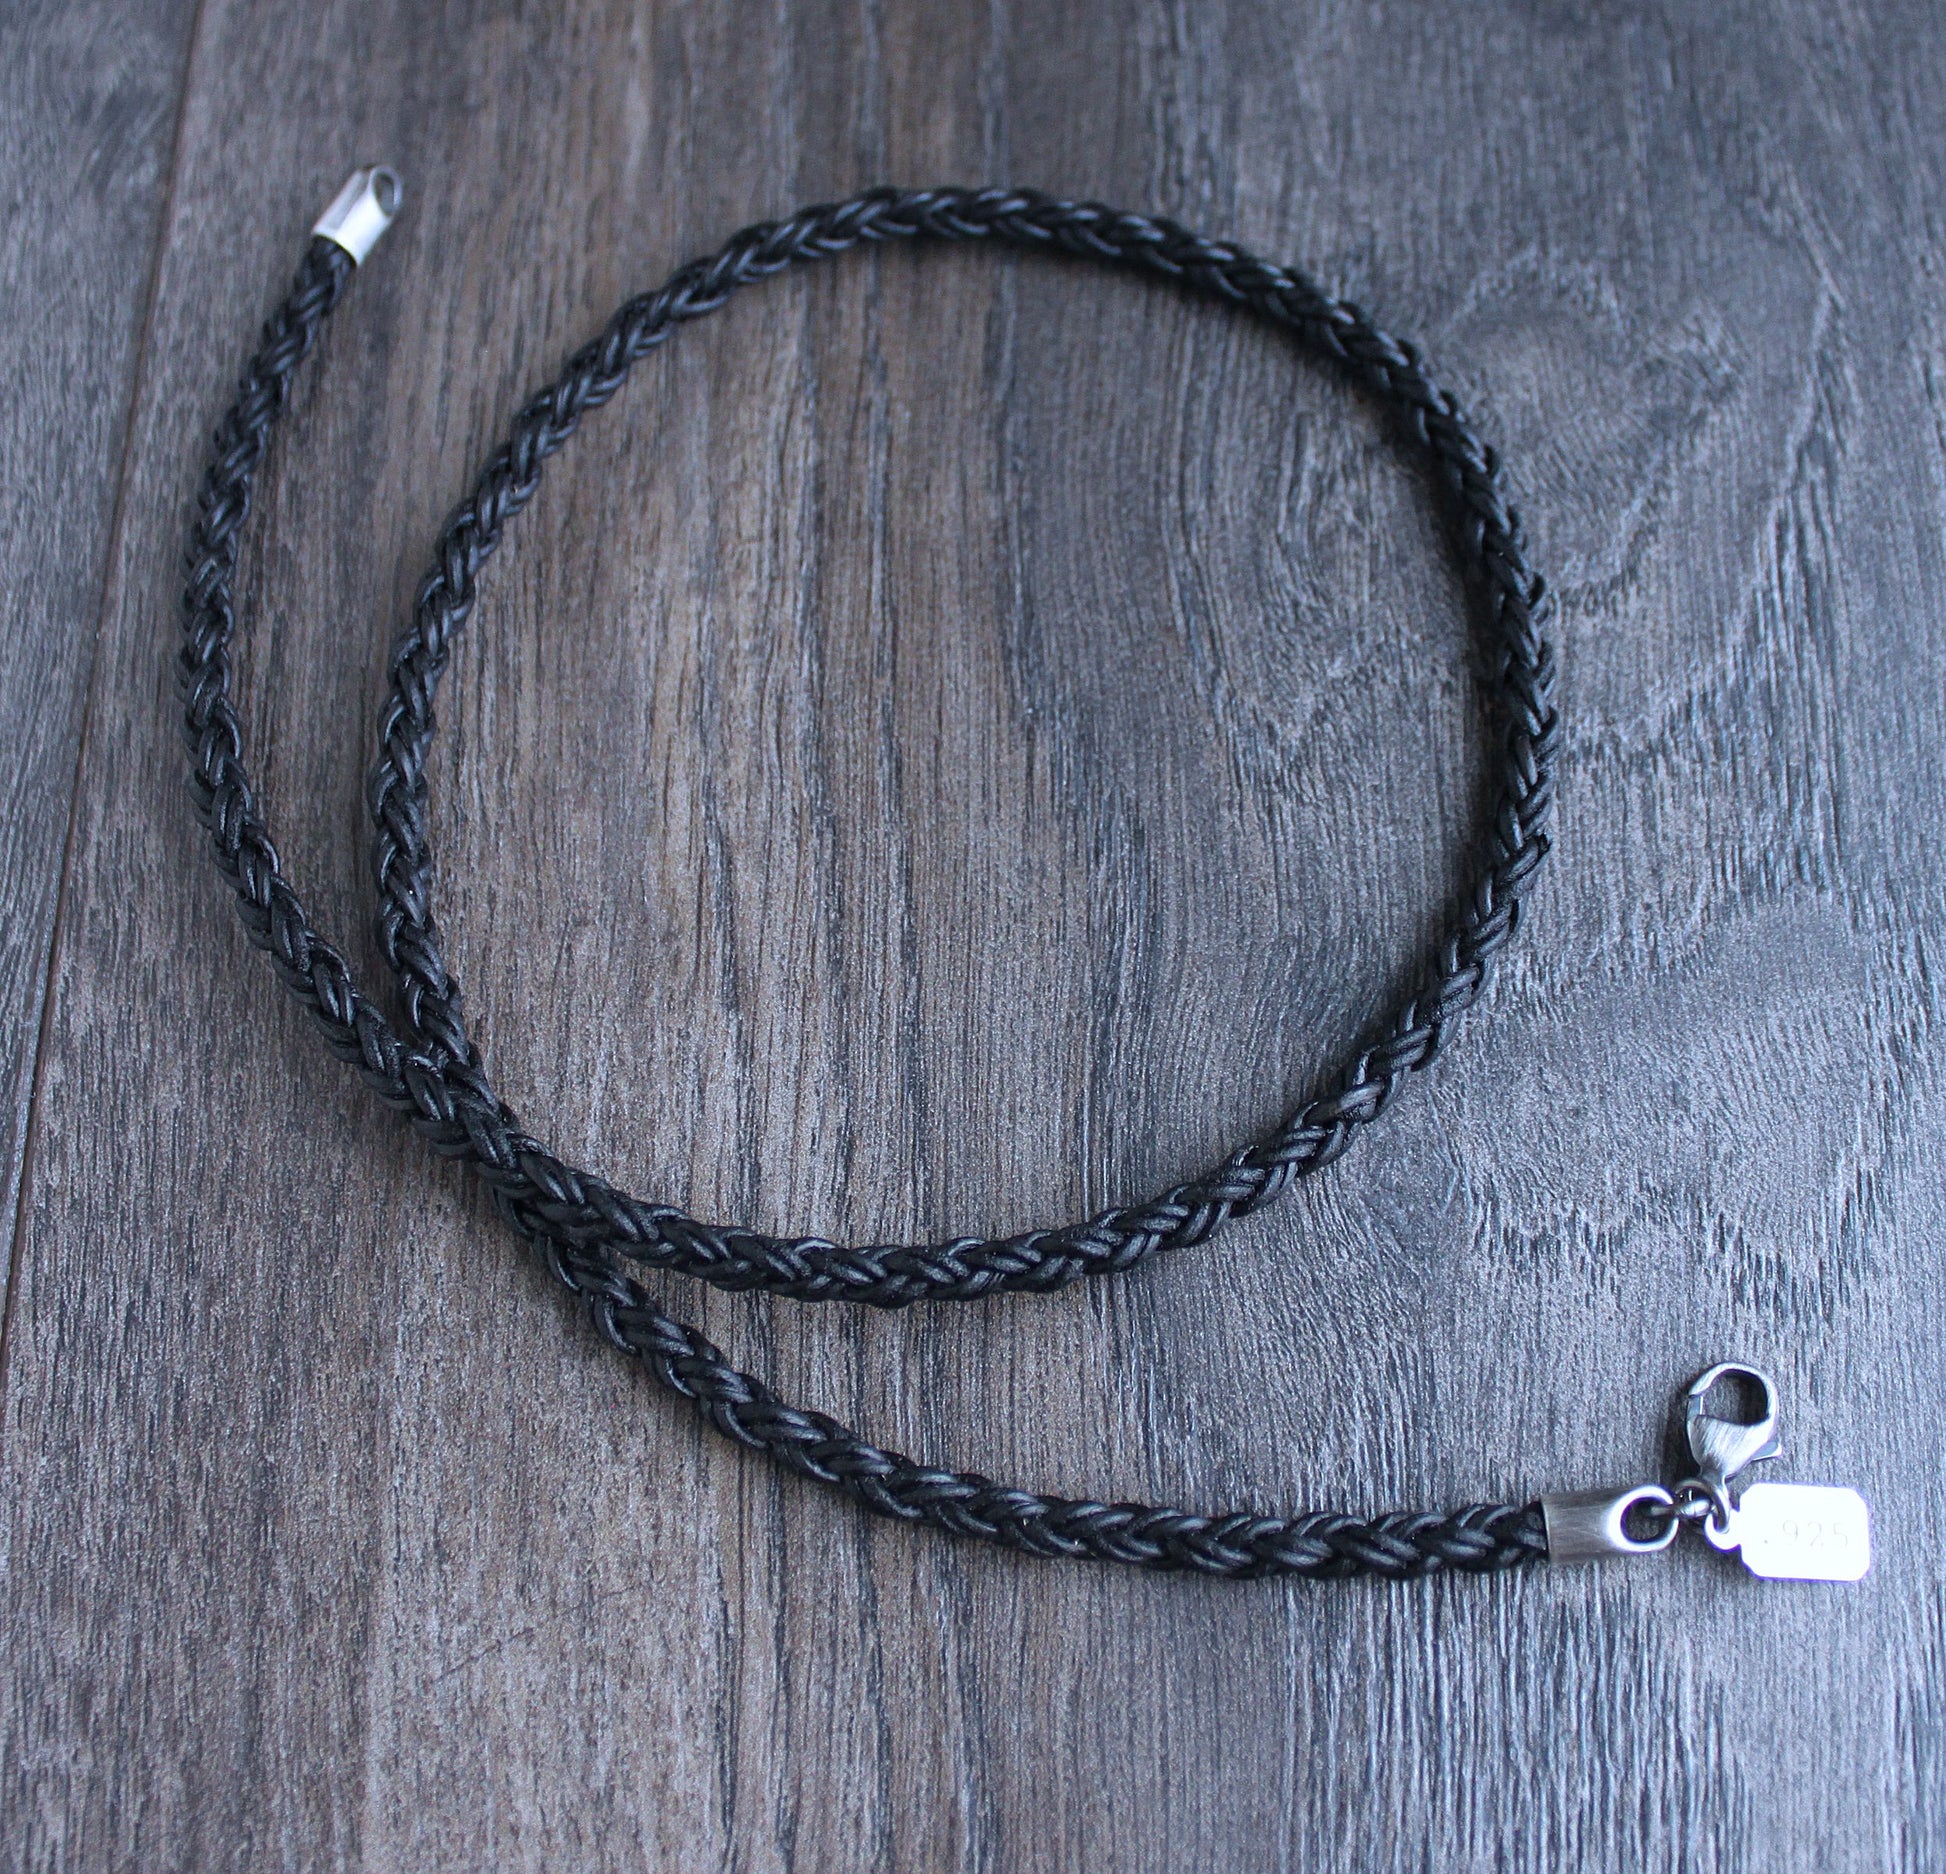 Black Round Braid Leather Necklace